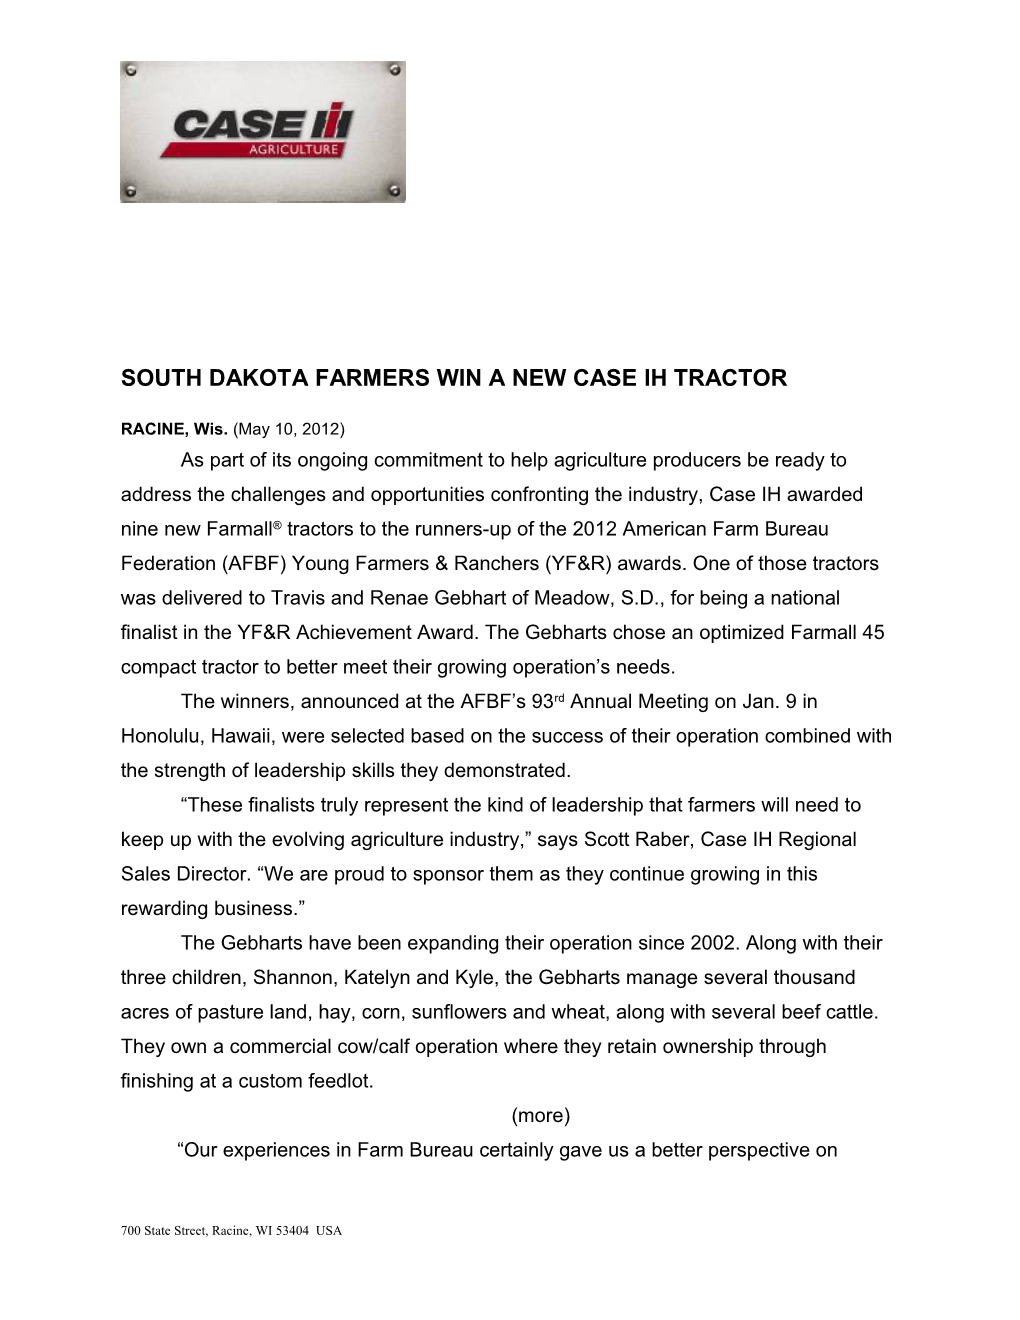 South Dakota Farmers Win a New Case Ih Tractor